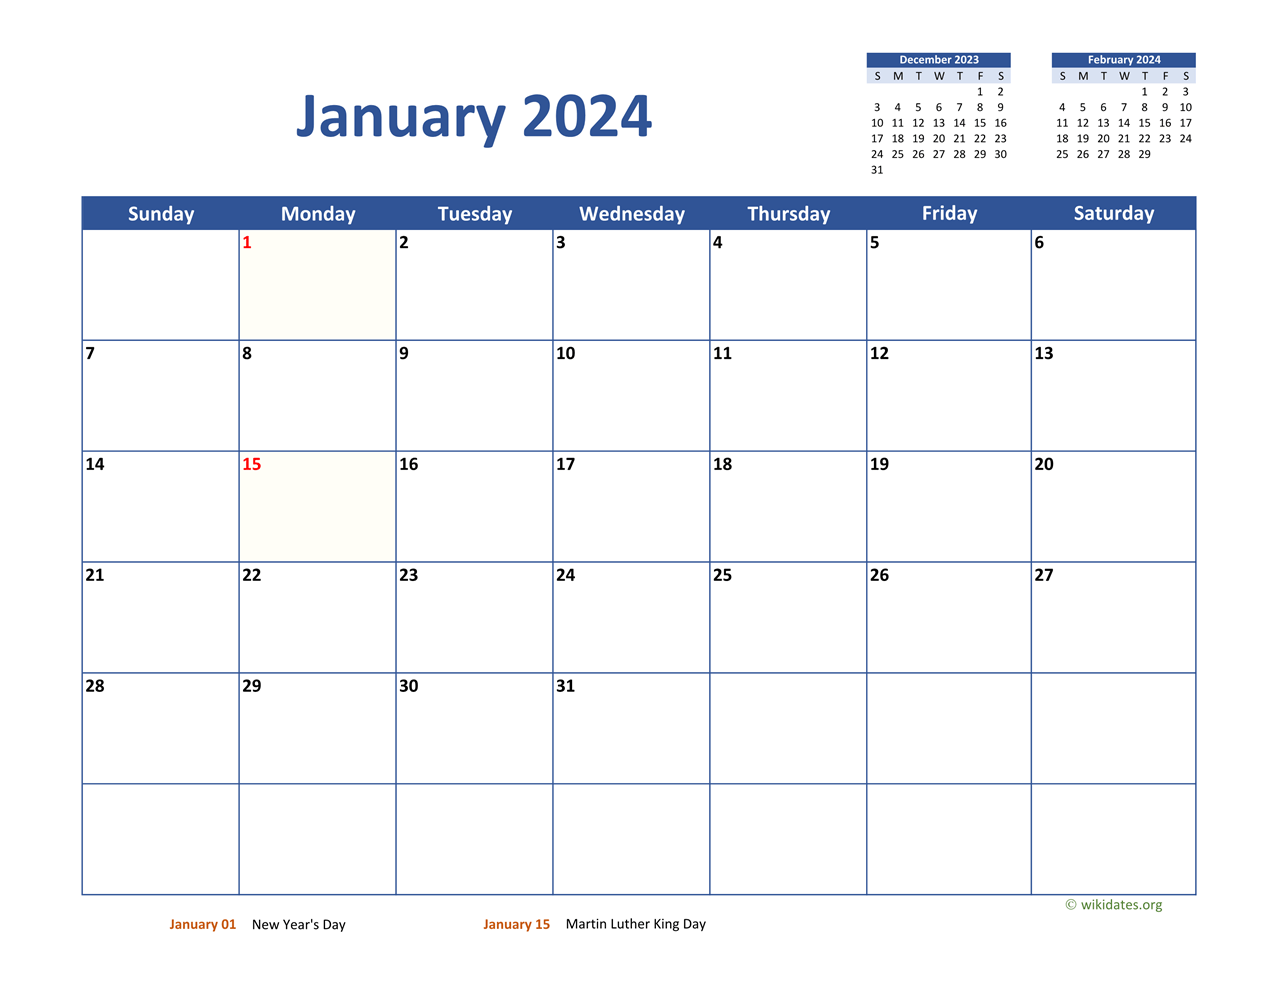 January 2024 Calendar Classic | WikiDates.org